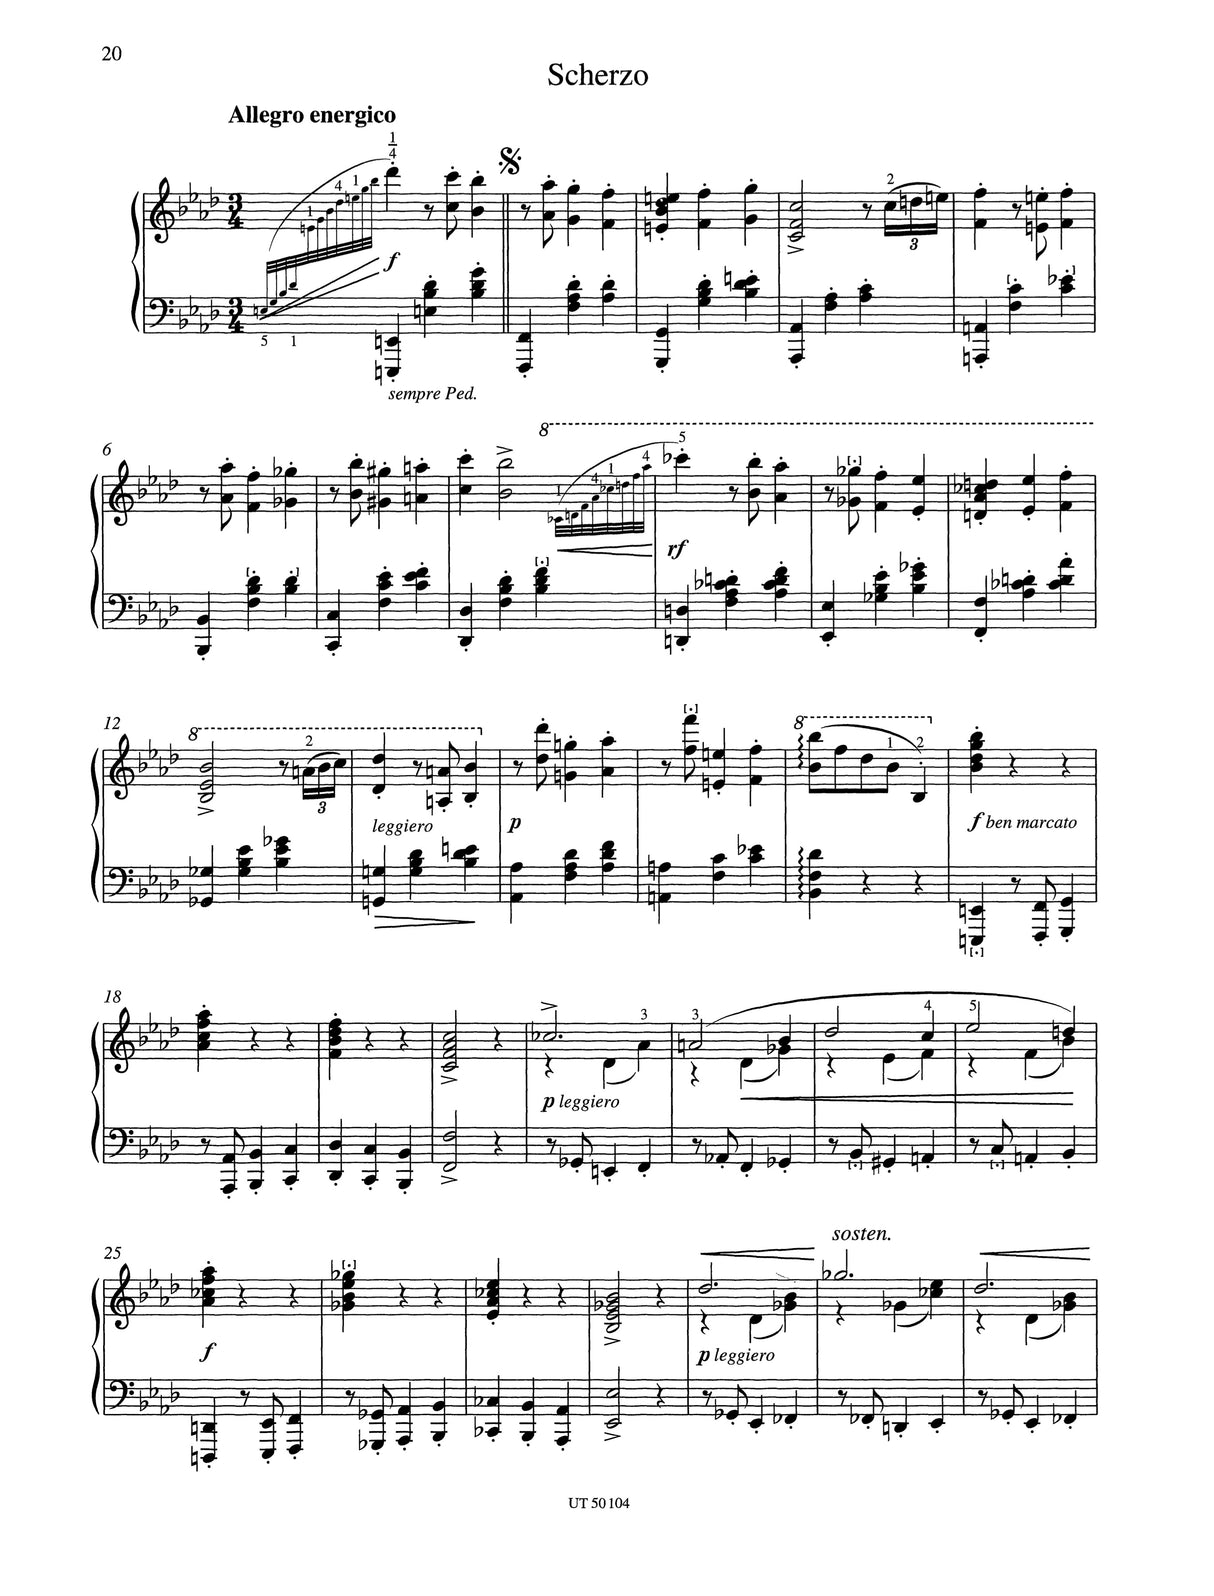 Brahms: Piano Sonata in F Minor, Op. 5